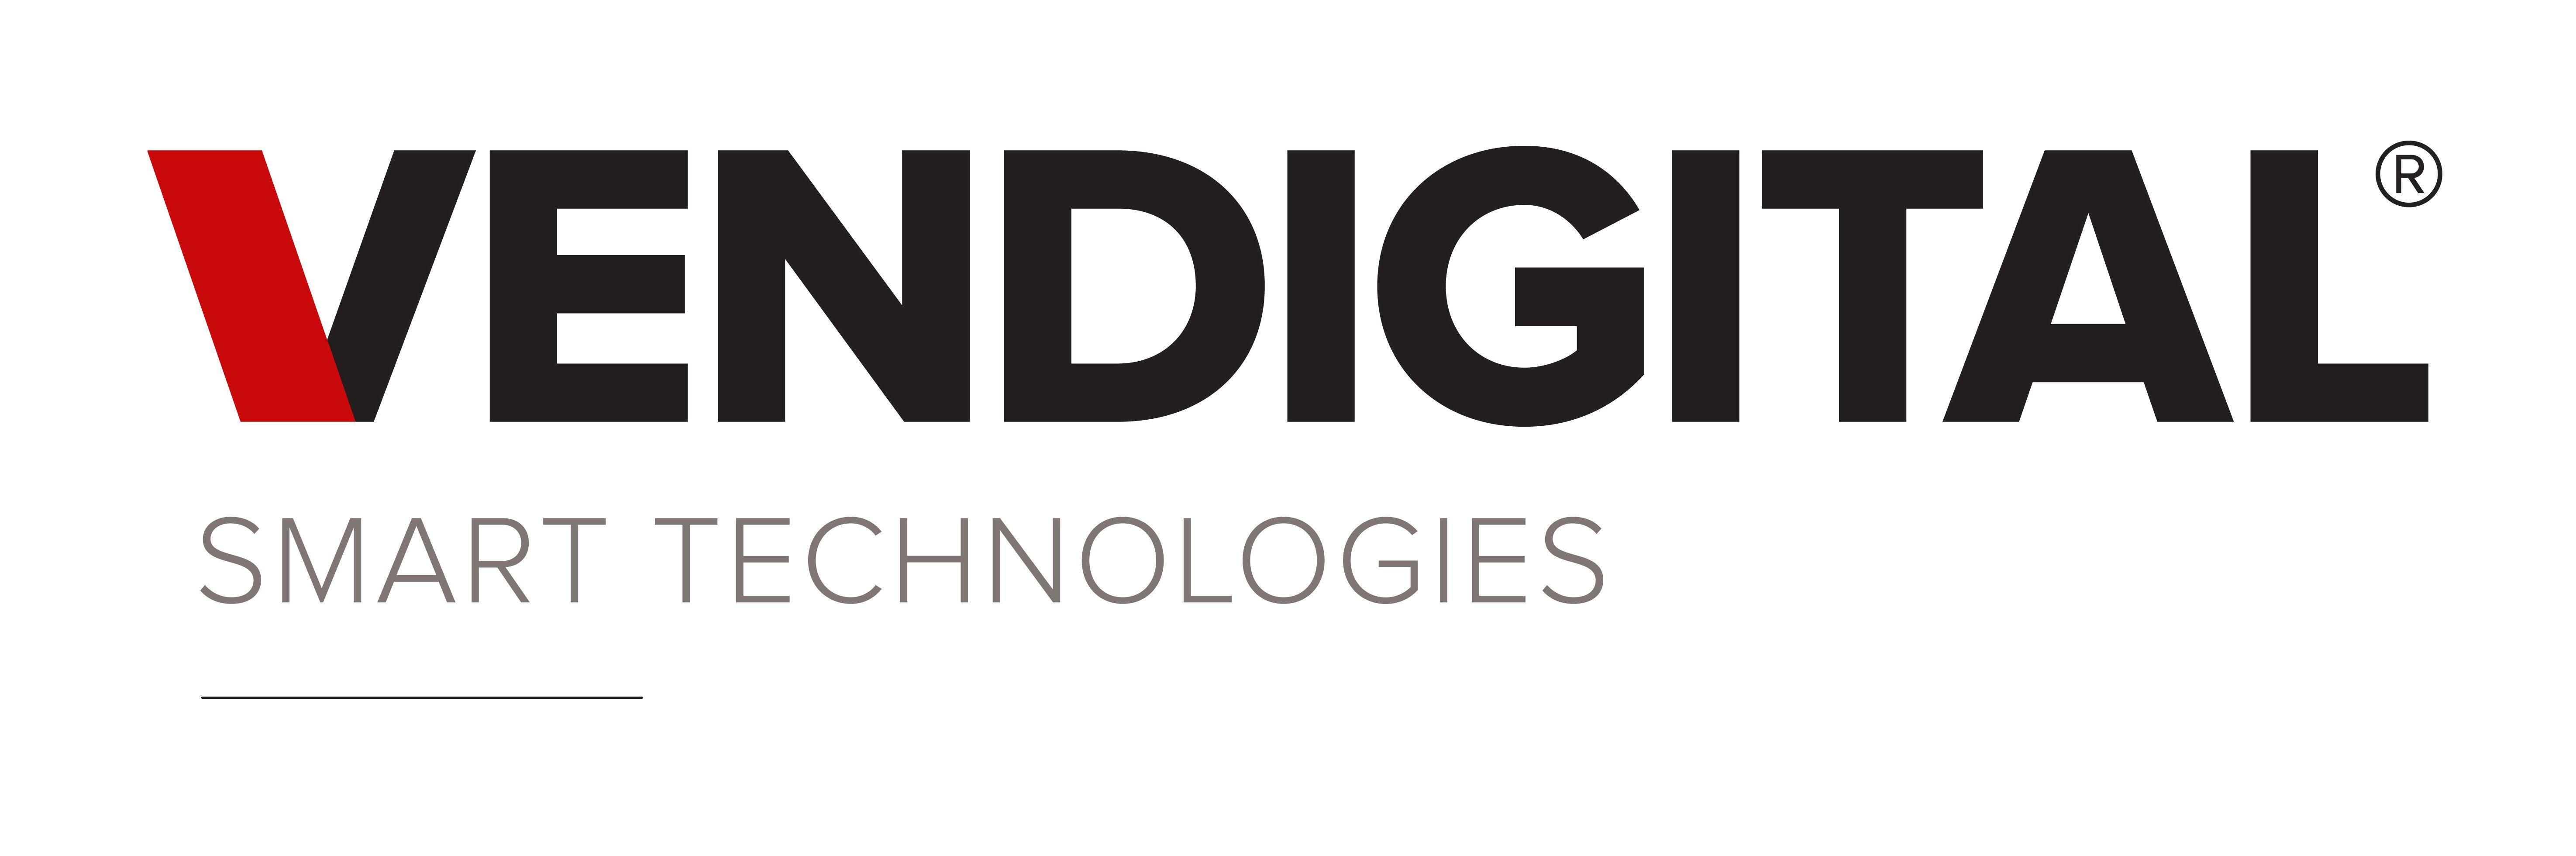 Smart Technologies Logo - Vendigital Logo Smart Technologies Print – Vendigital